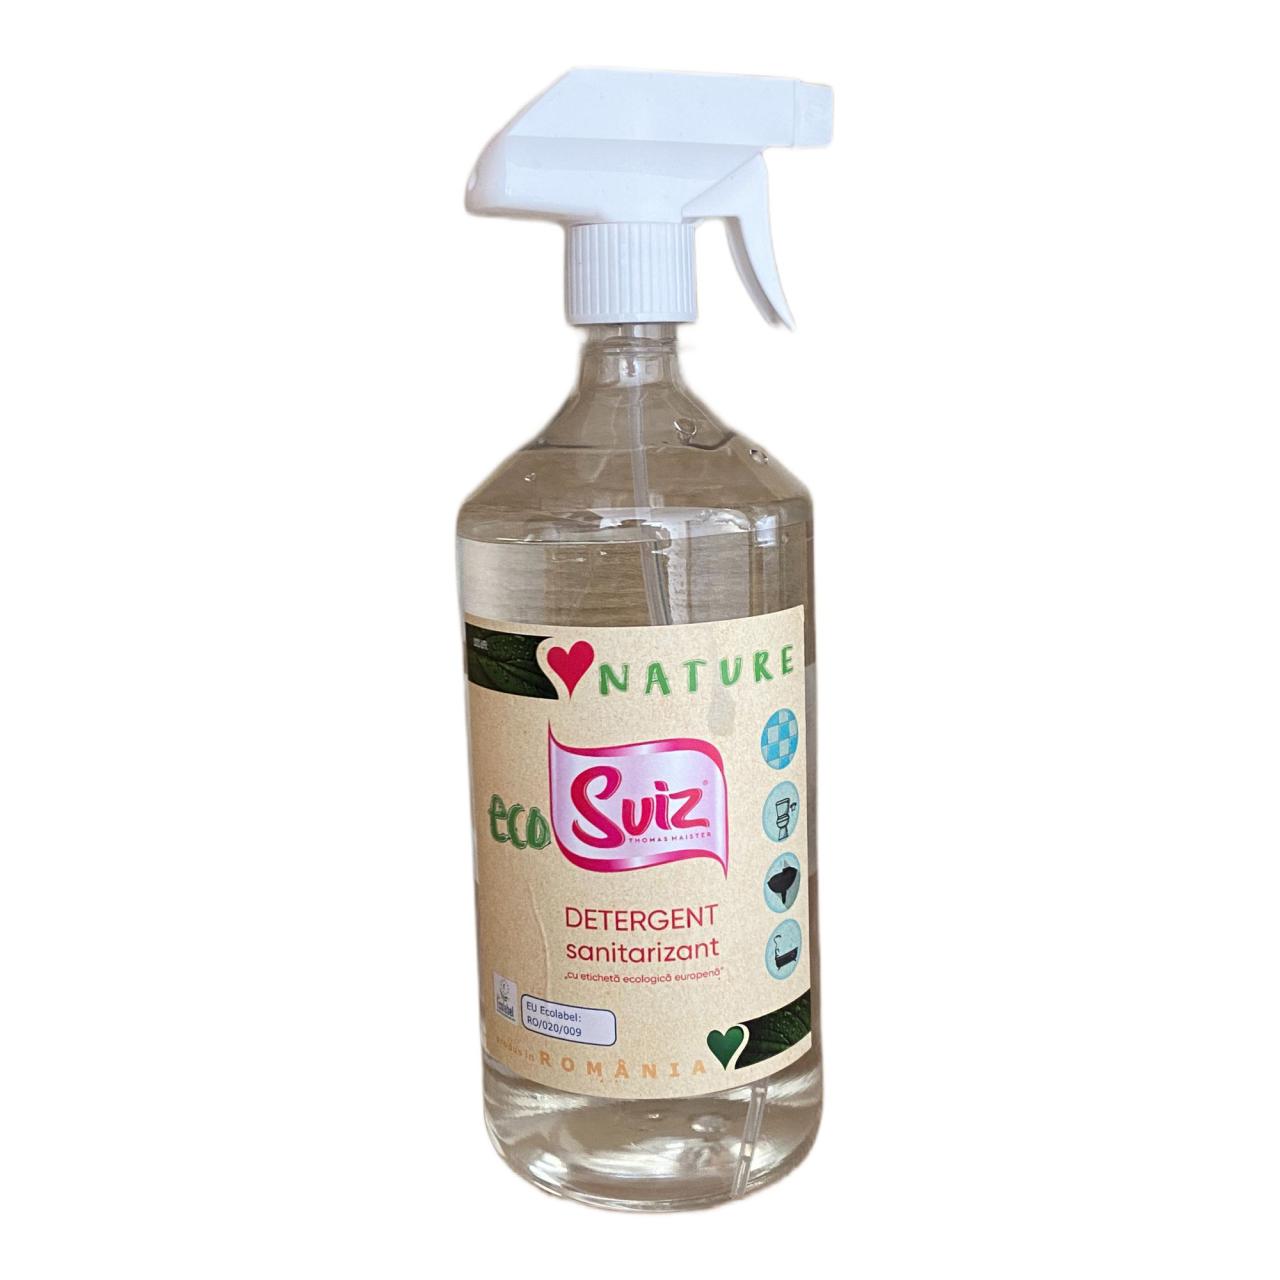 Detergent sanitizant pentru bai Ecosviz, 1 L